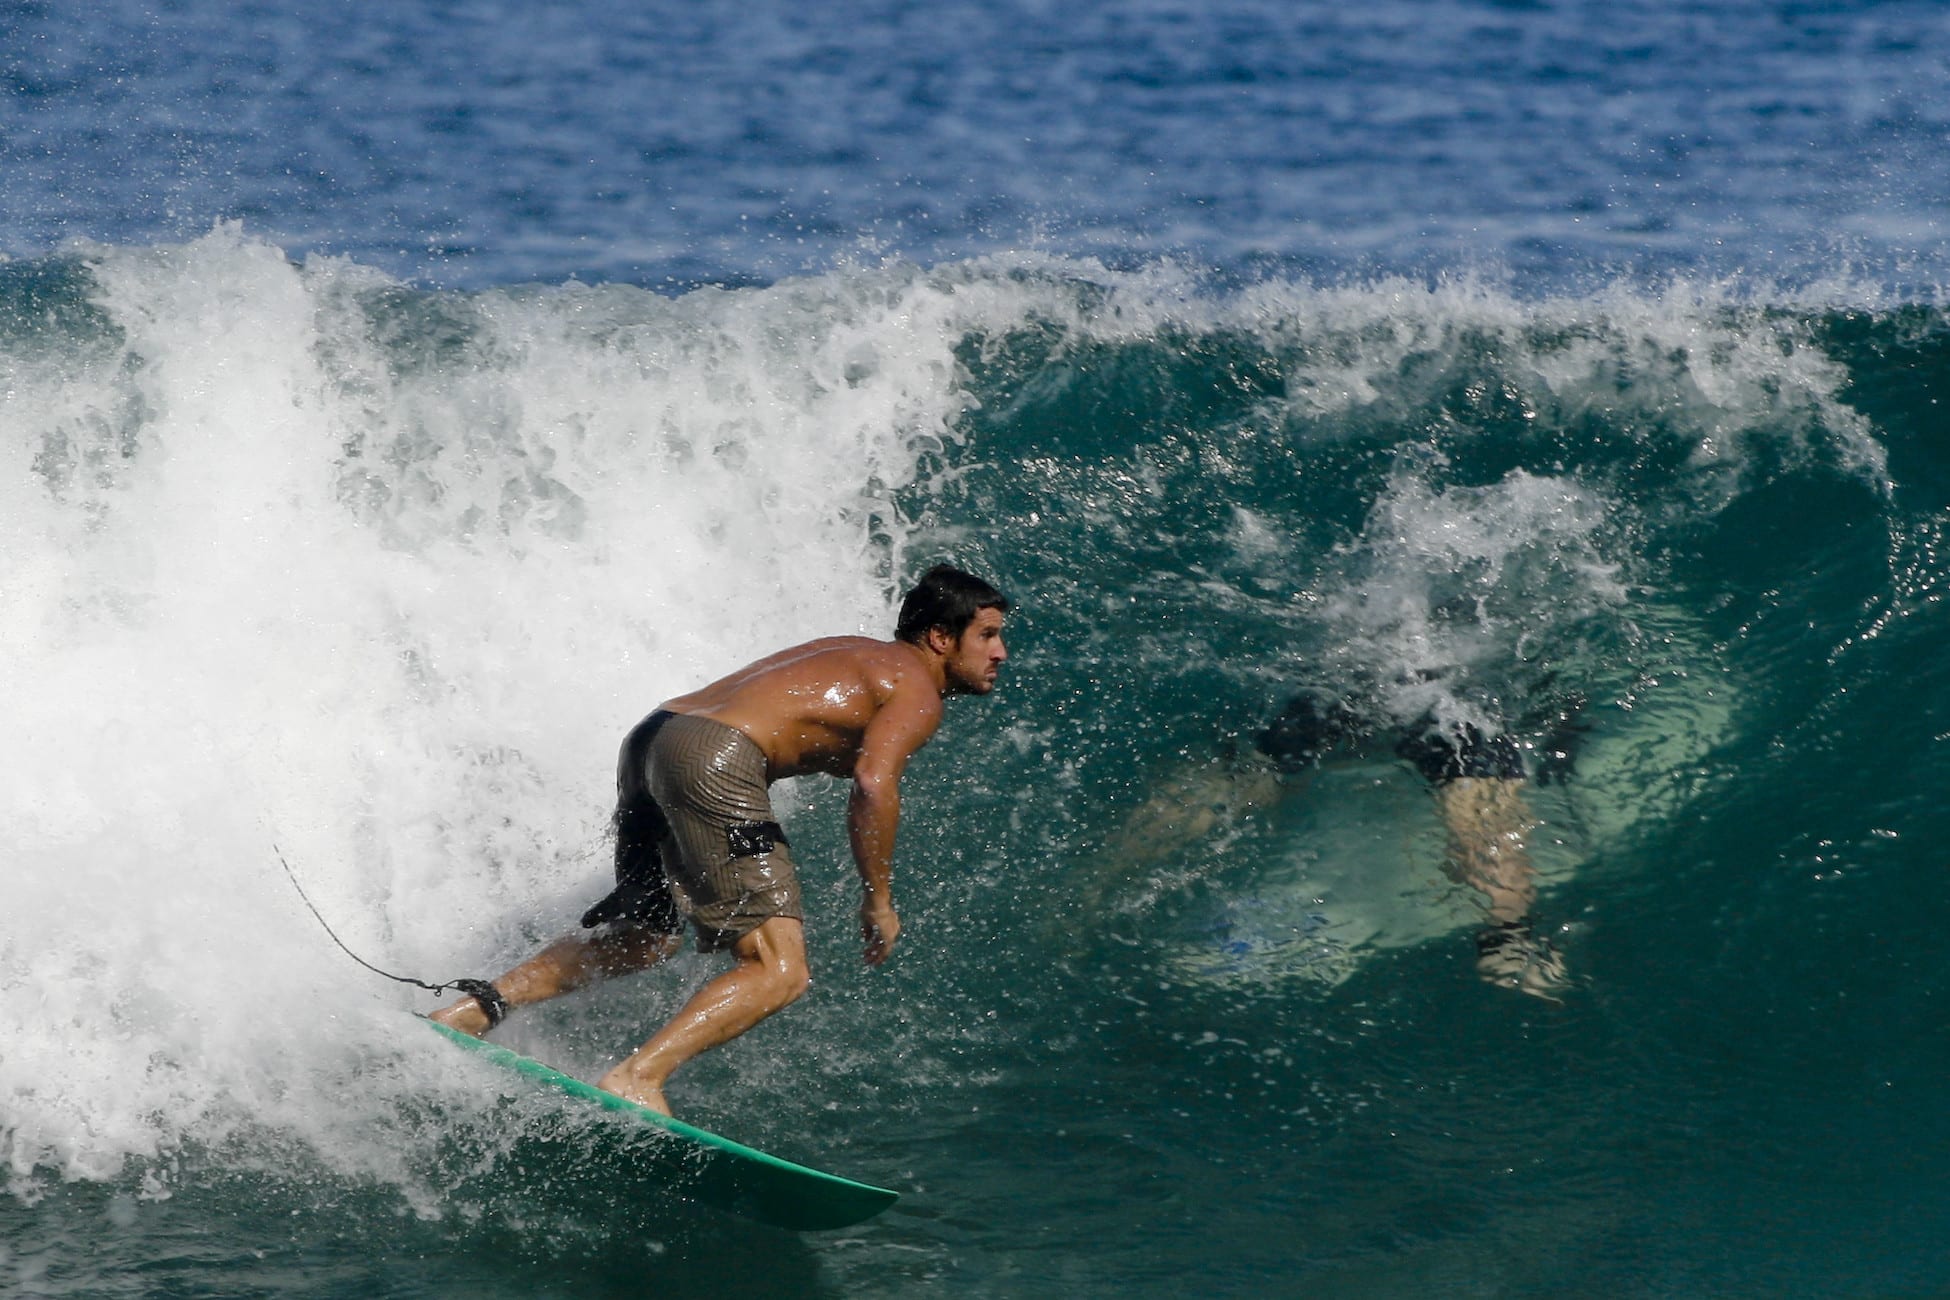 Rio nexpa surf